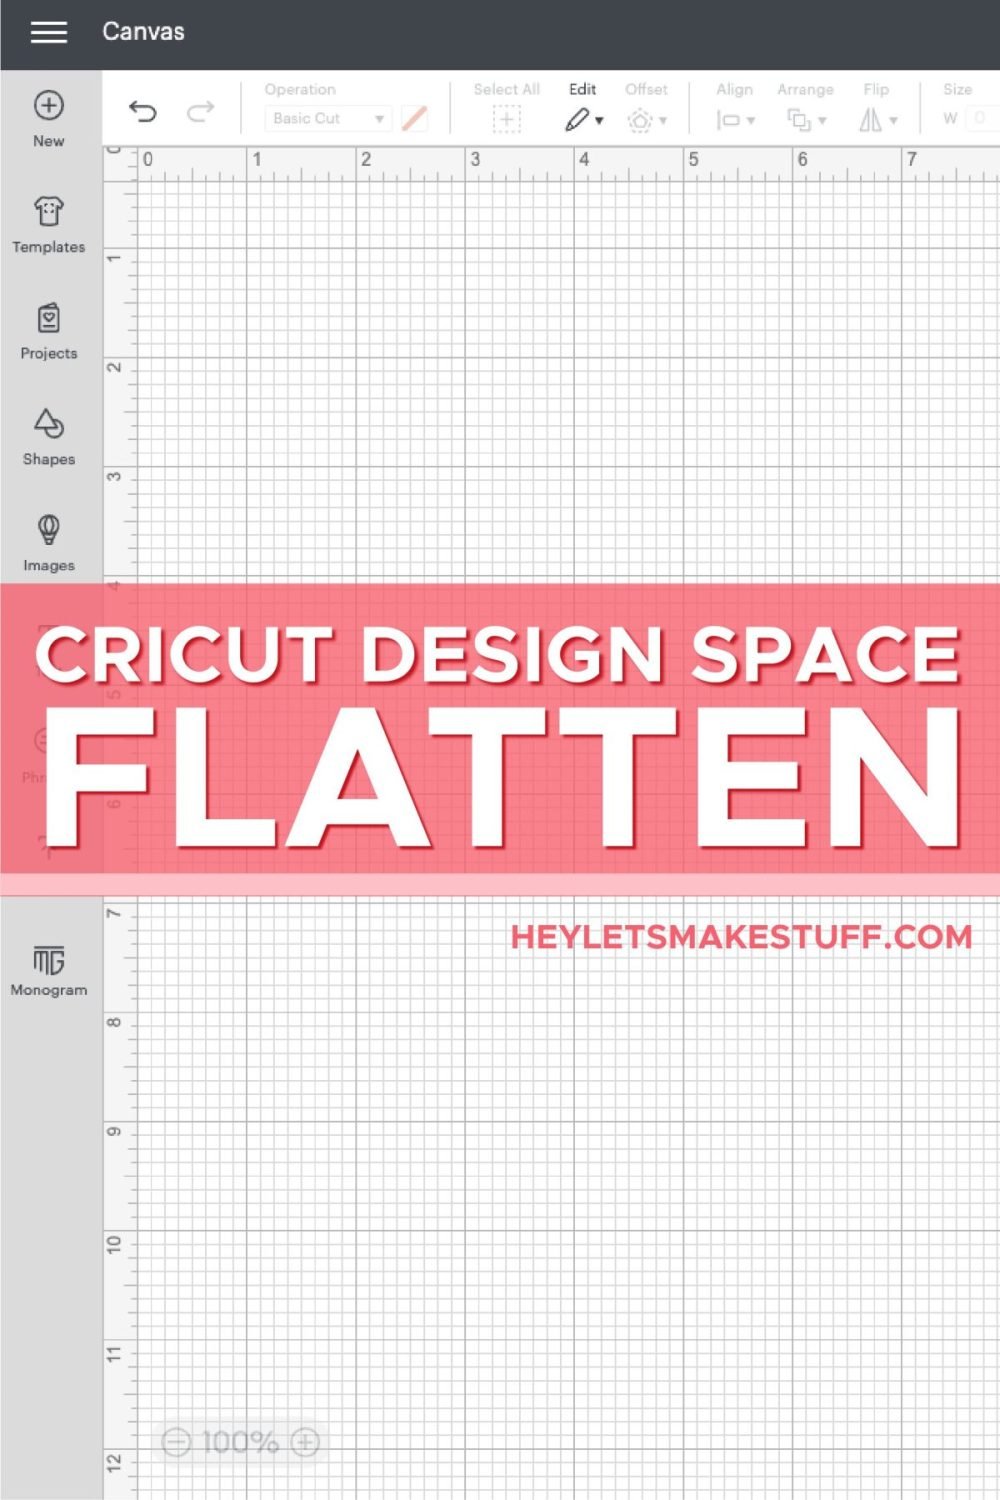 Cricut Design Space Flatten Pin Image